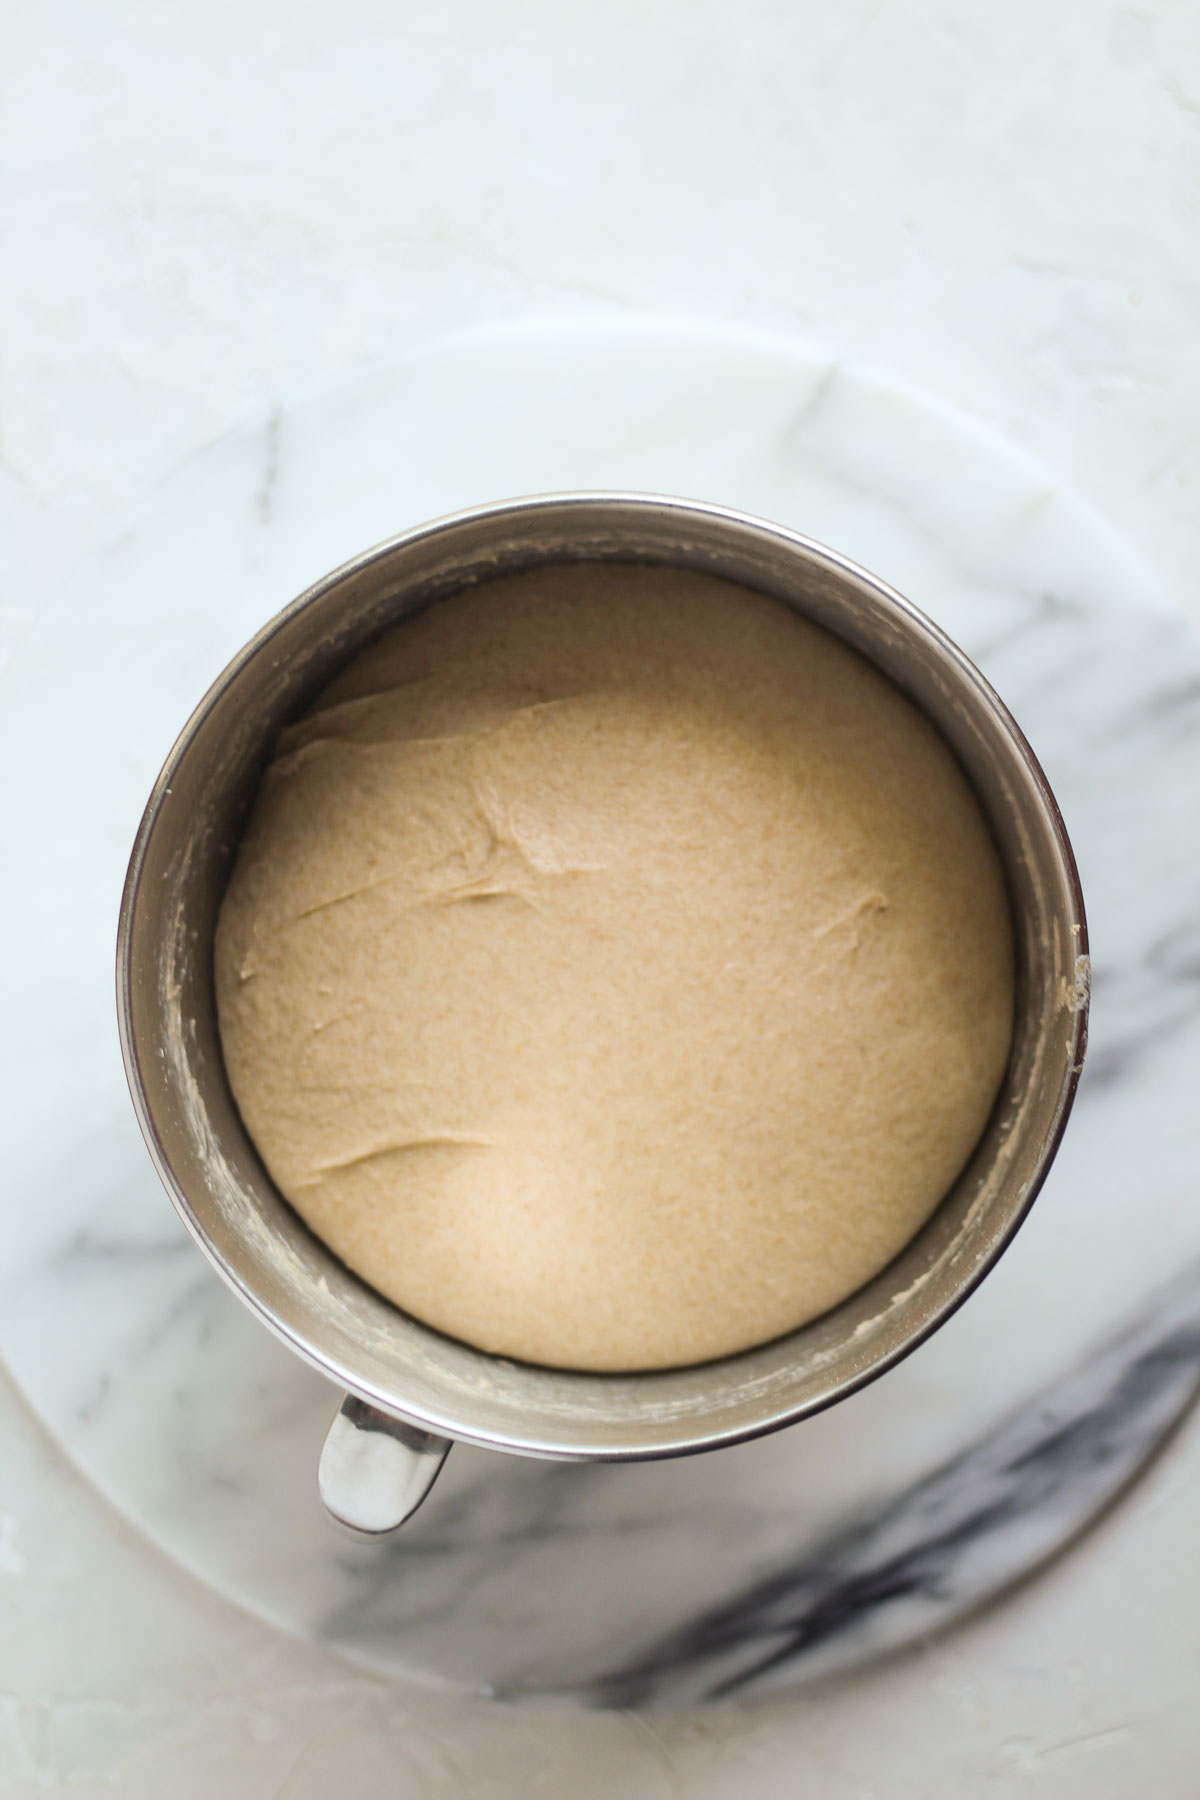 Sourdough brioche dough in a bowl